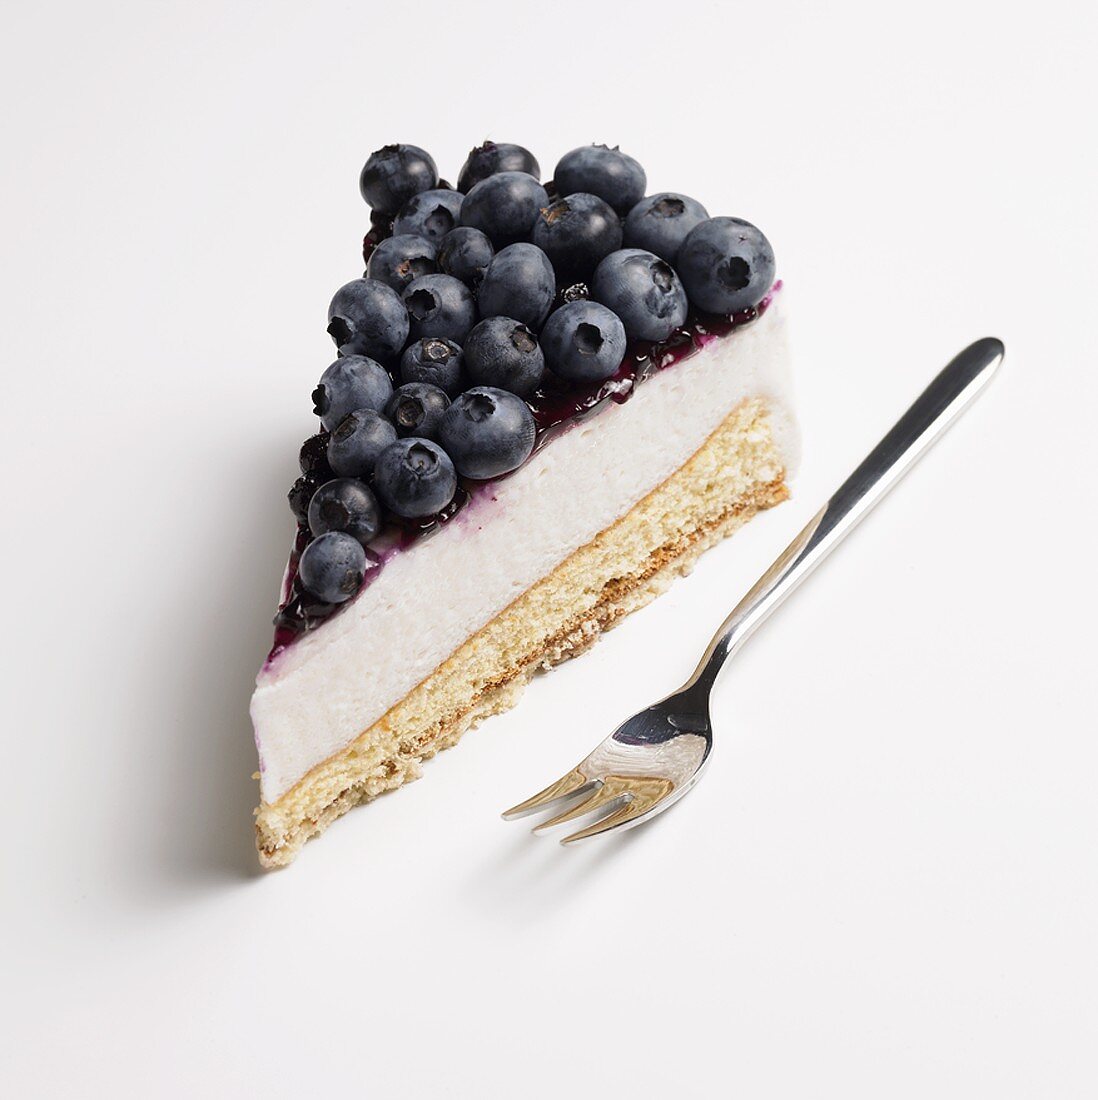 A piece of blueberry cream cake